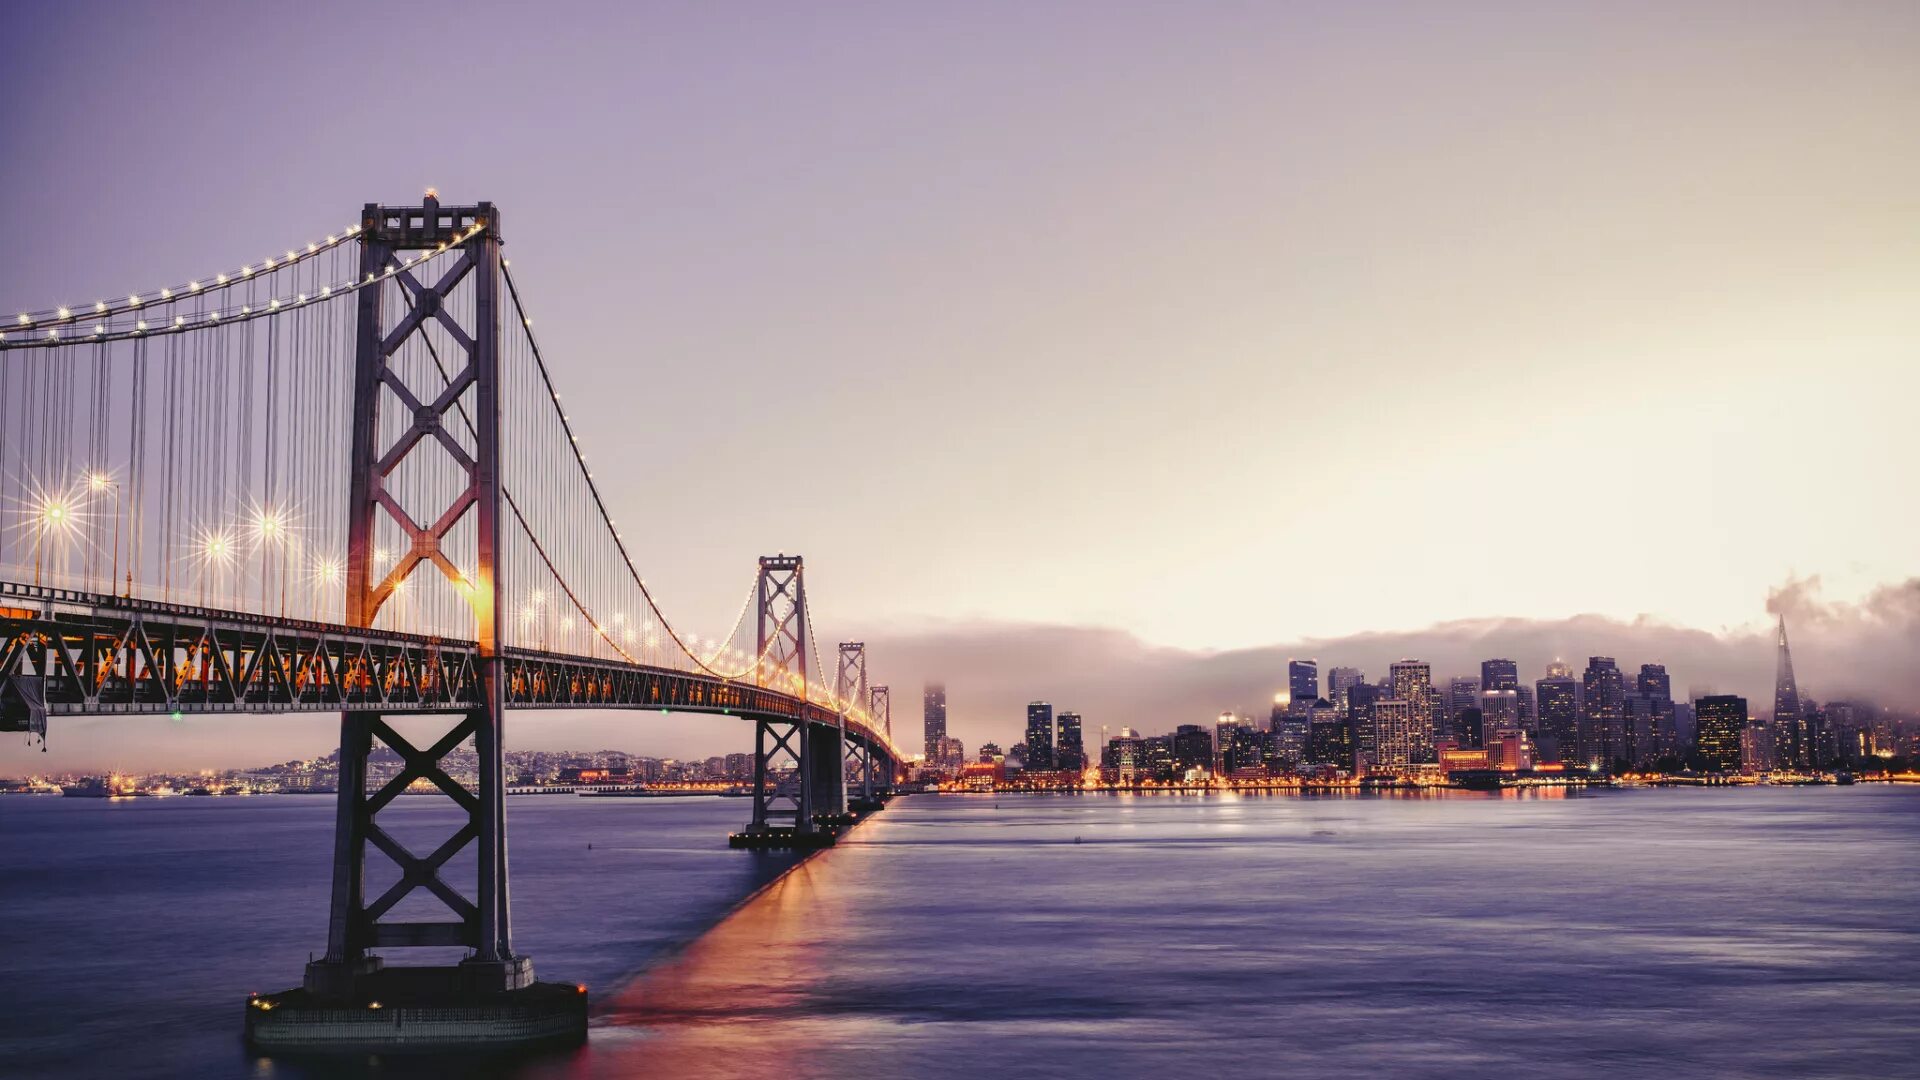 1920x1080 60. Сан Франциско. Мост Bay Bridge Сан-Франциско. Сан-Франциско, Калифорния, США. Мост Окленд Бэй бридж.